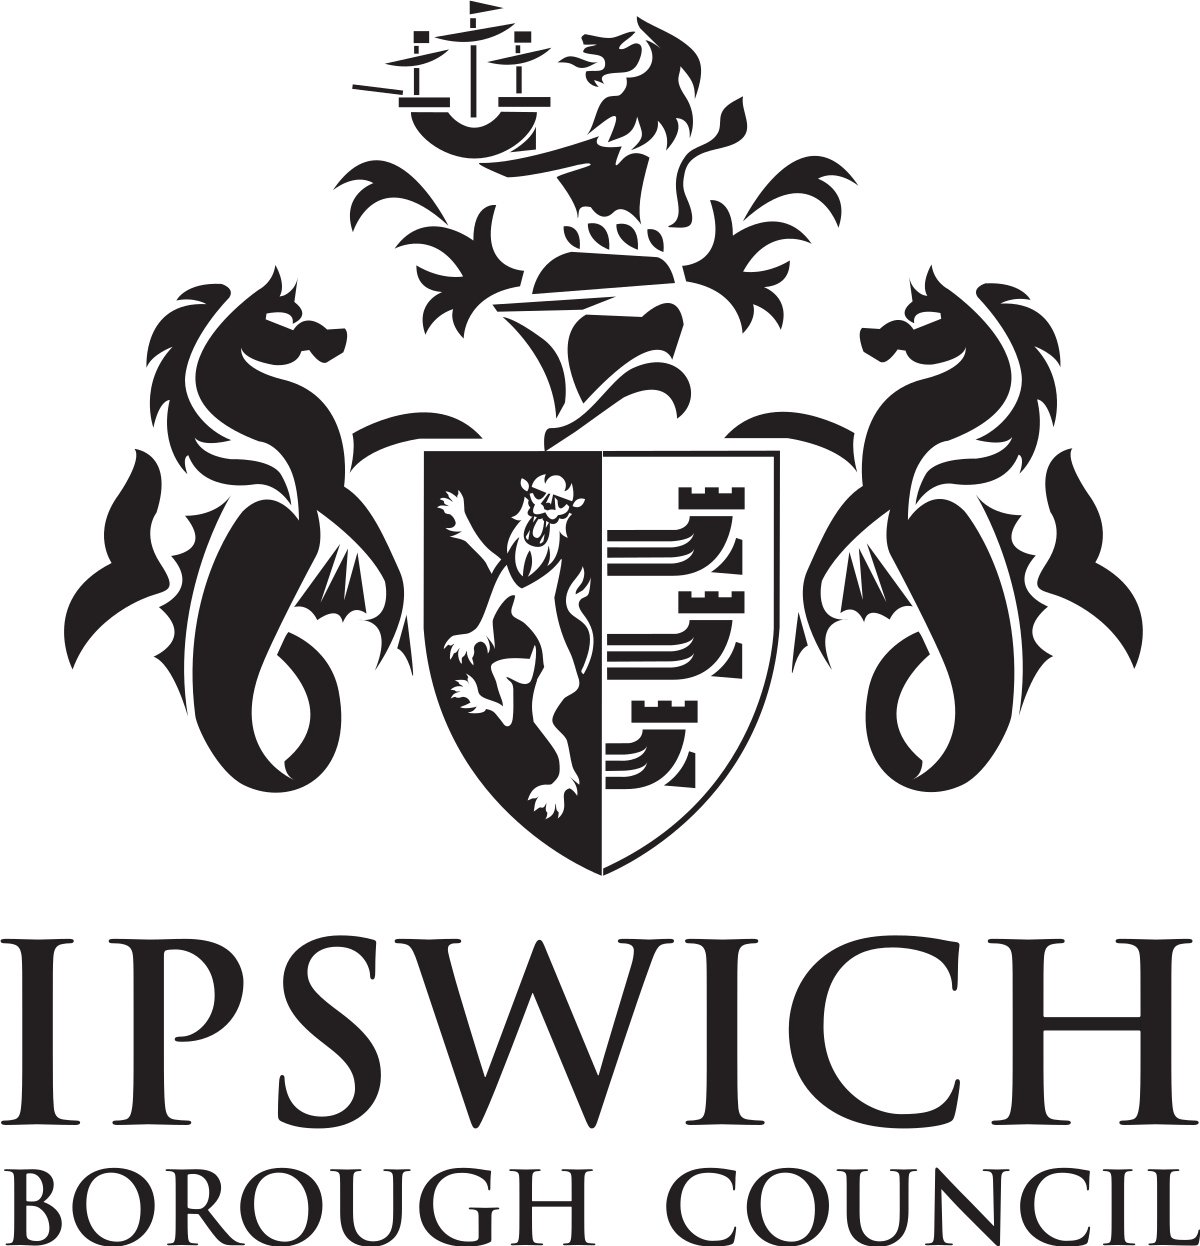 Ipswich_Borough_Council_logo.svg.png